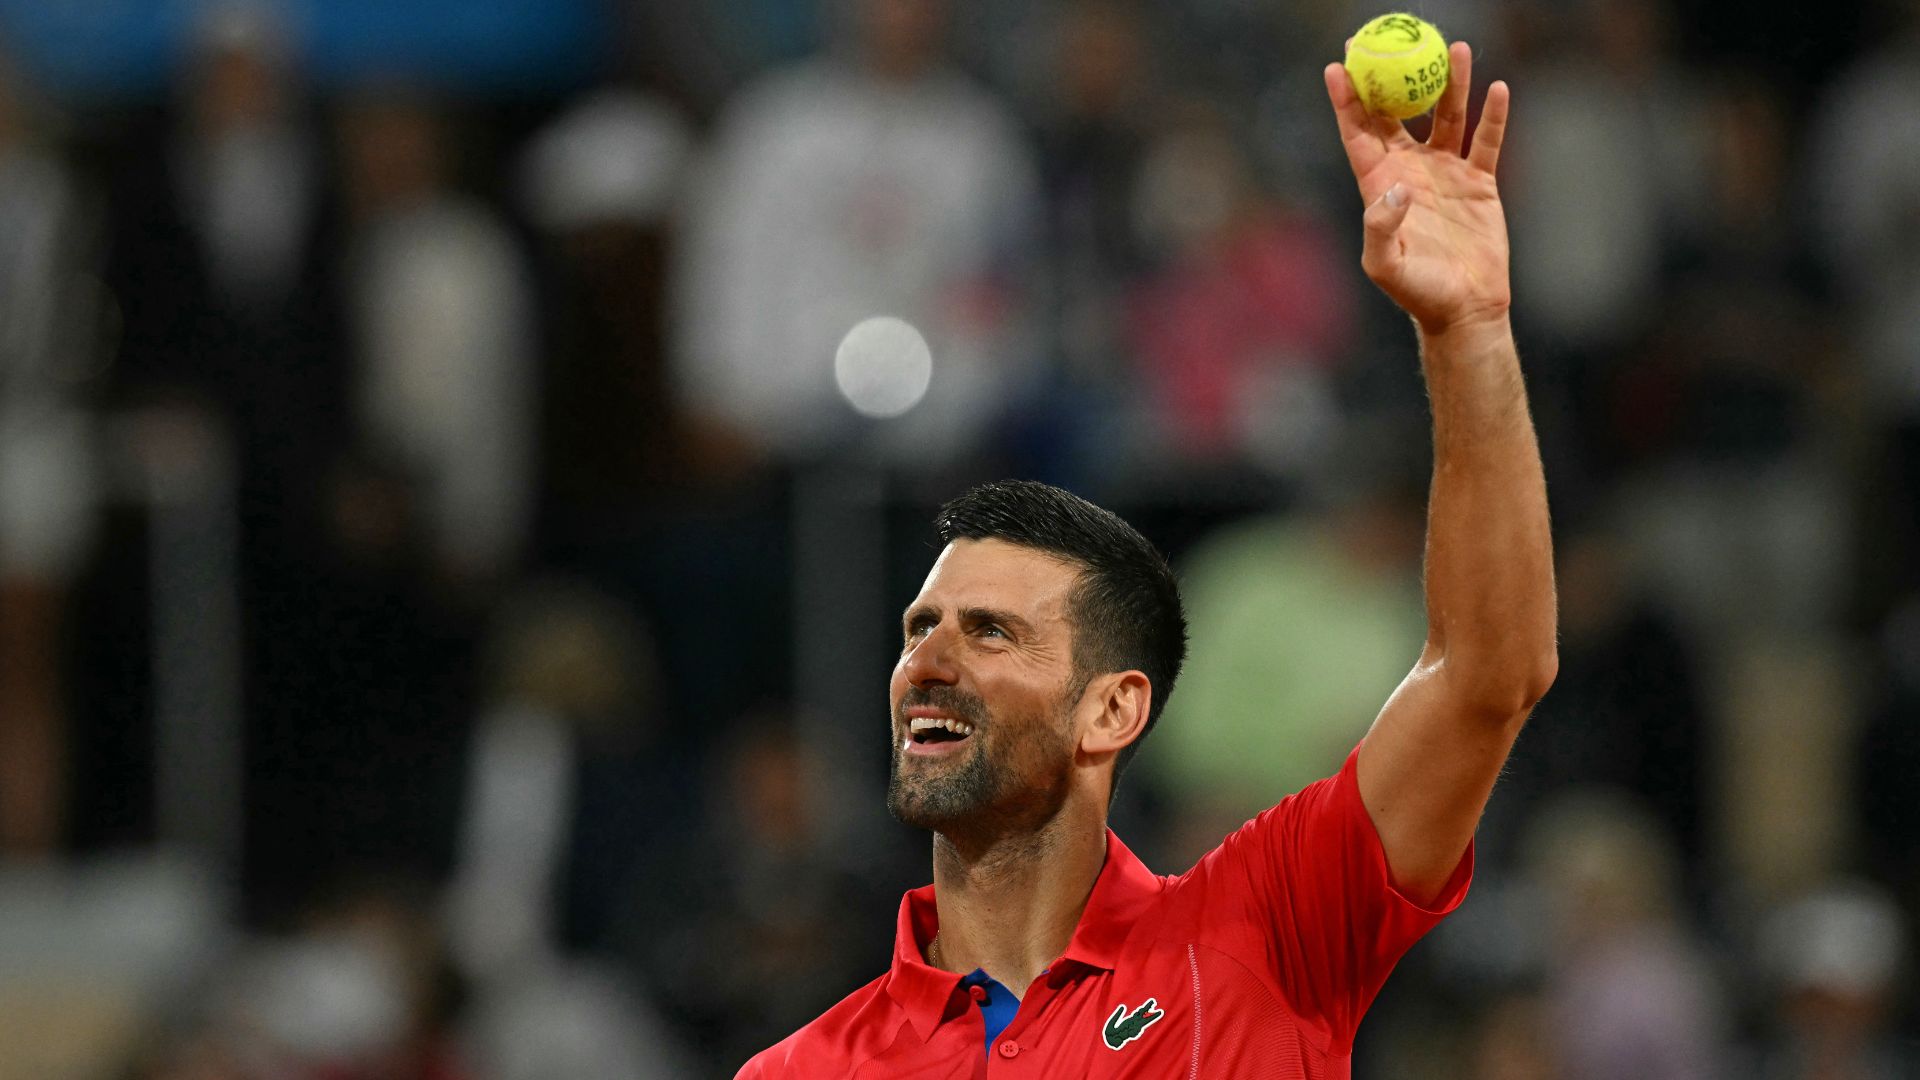 Djokovic makes dominant start